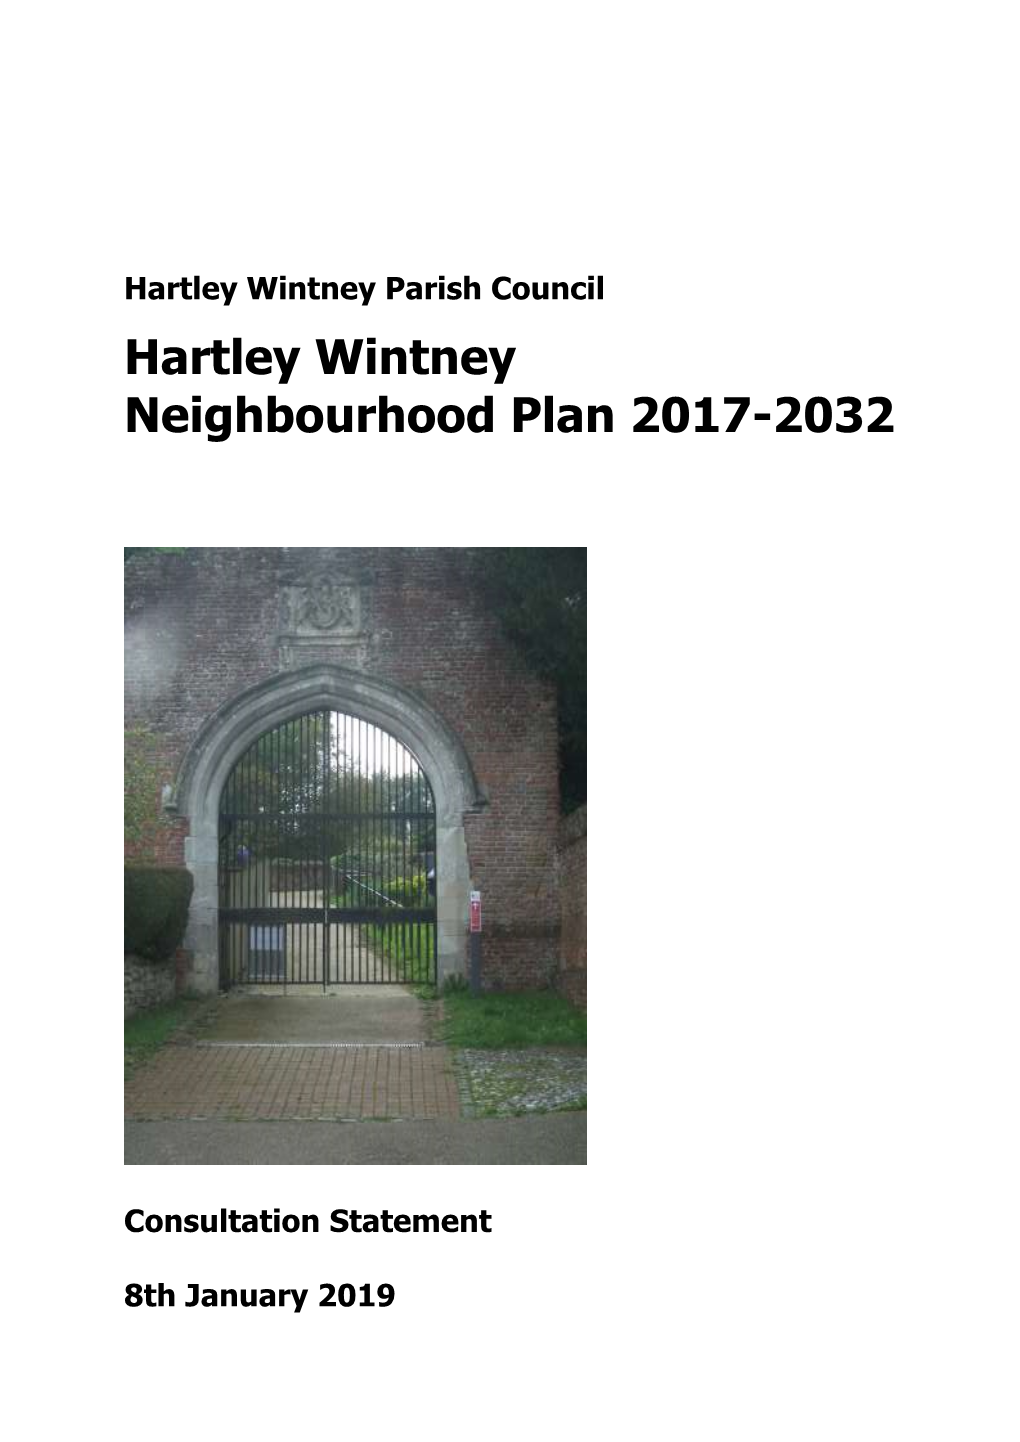 Hartley Wintney Neighbourhood Plan 2017-2032